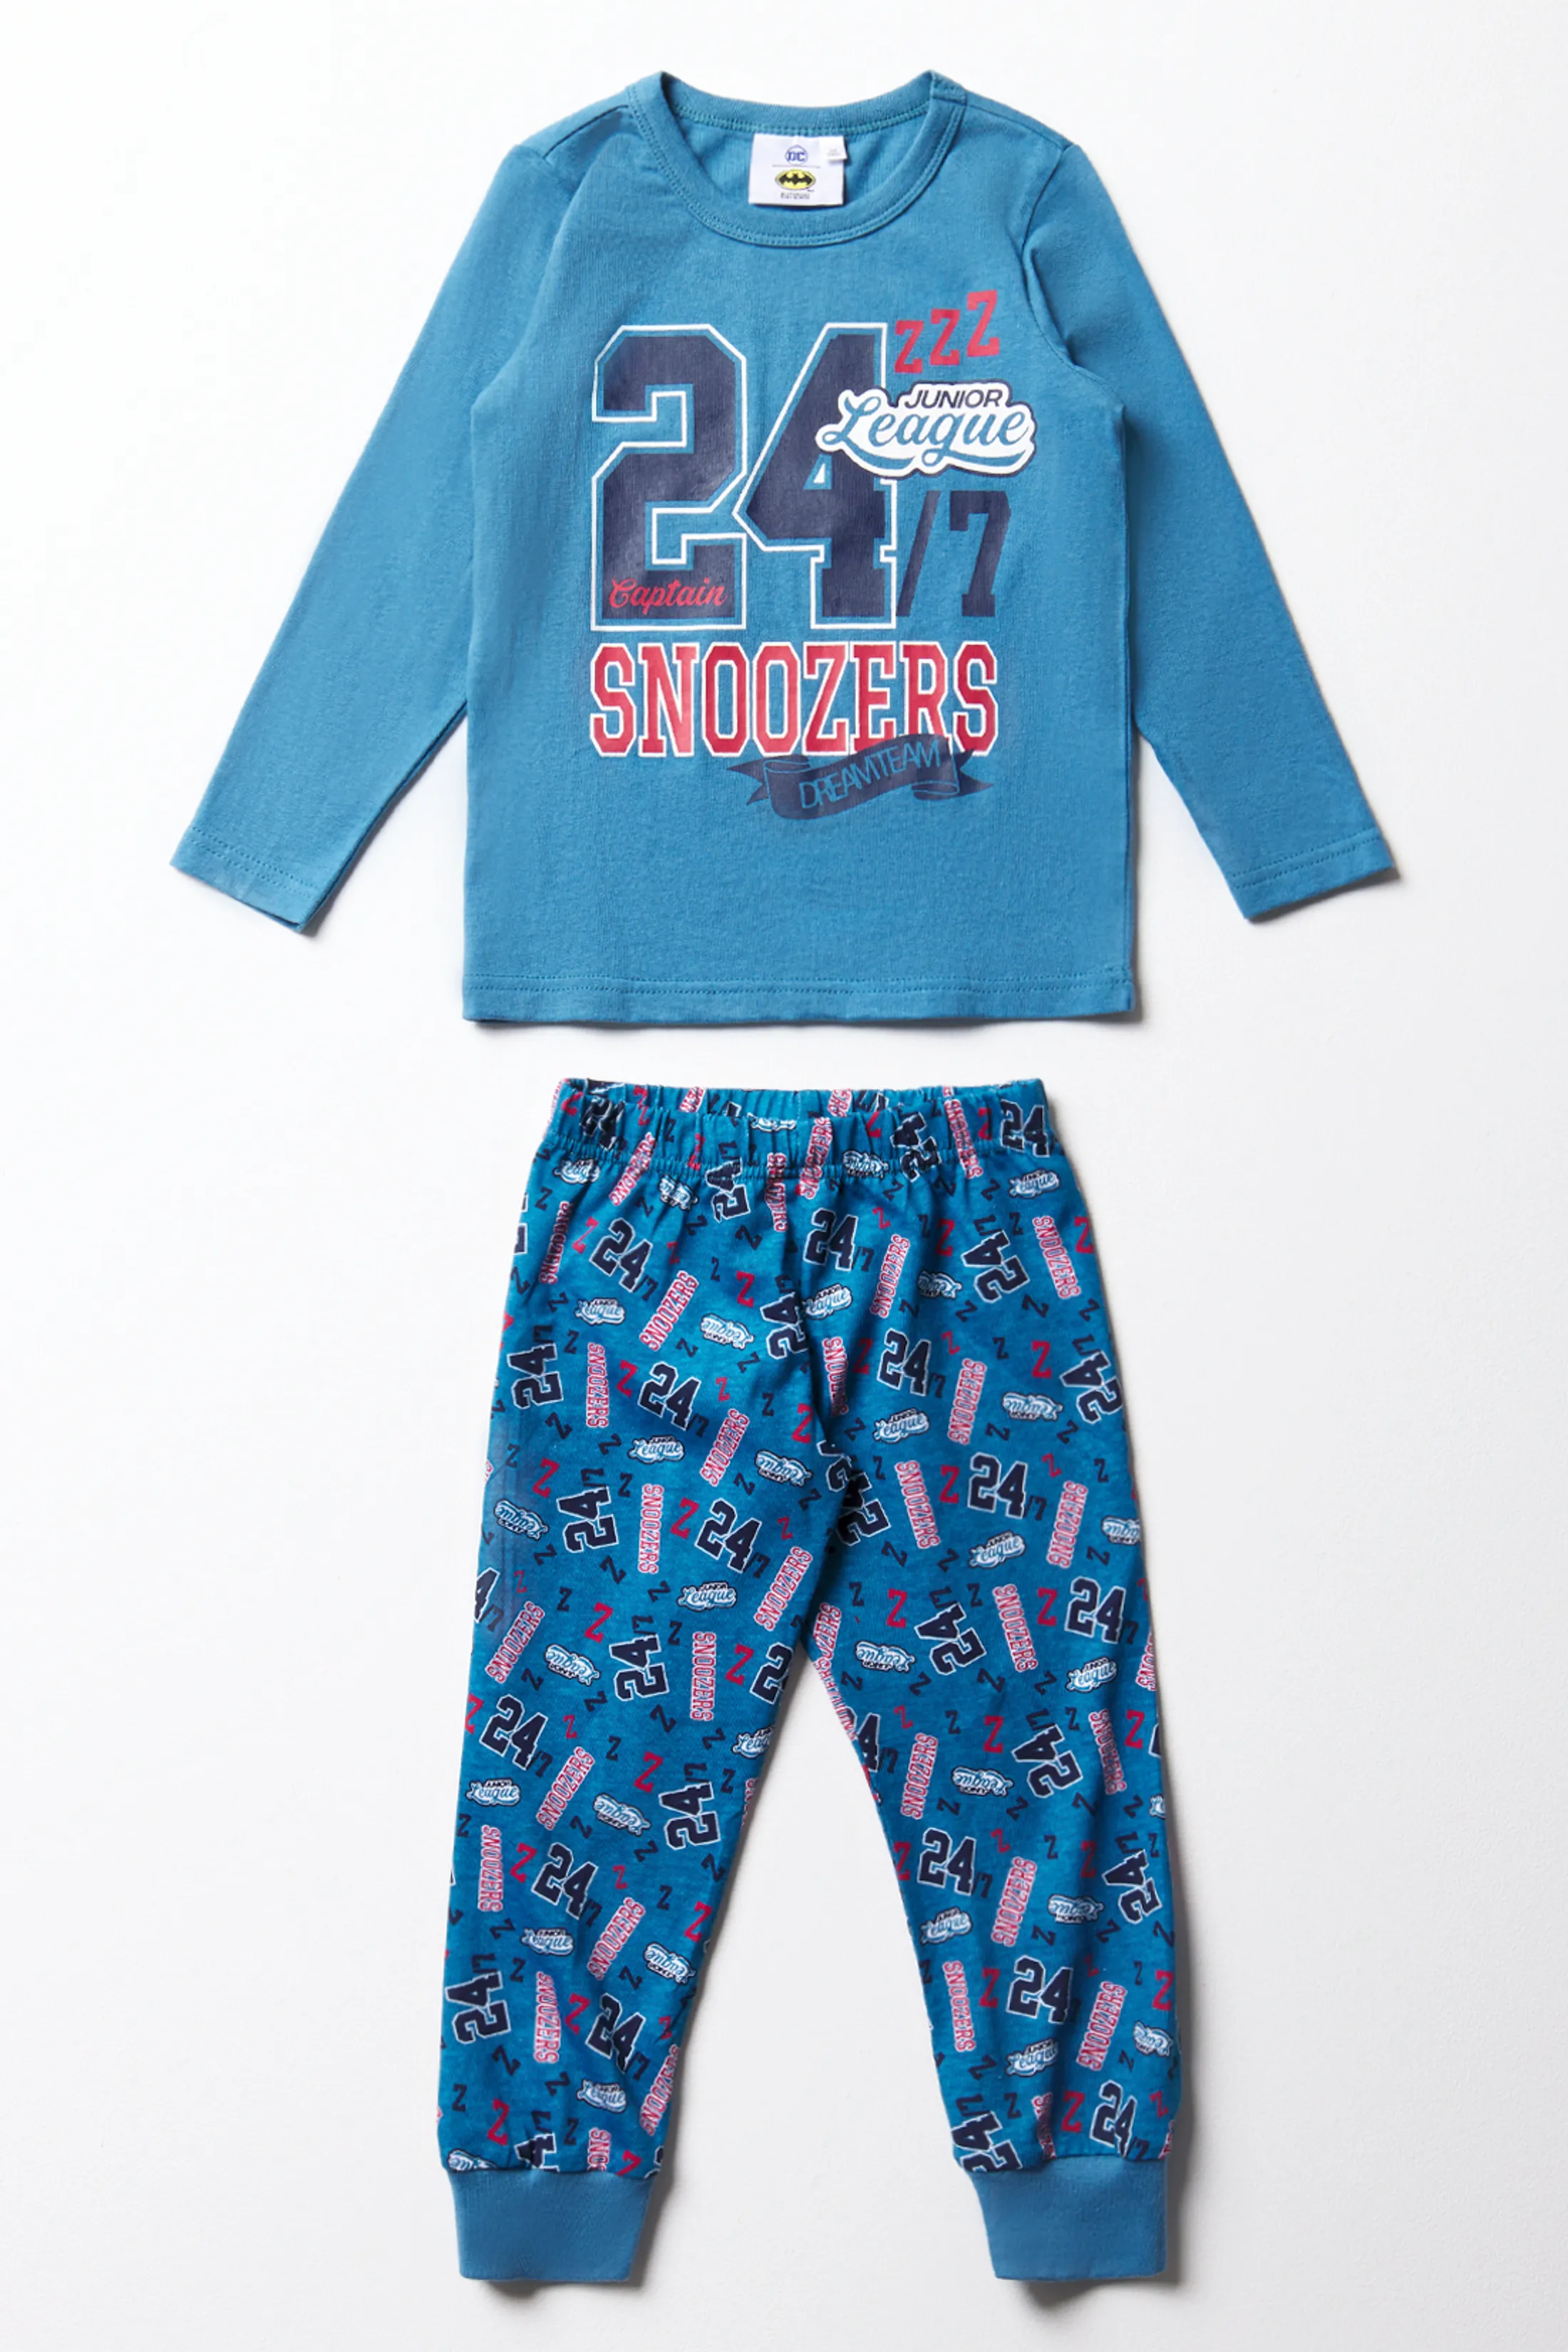 Kid's/Youth Long Sleeve Pajama Set | Blue Checkers